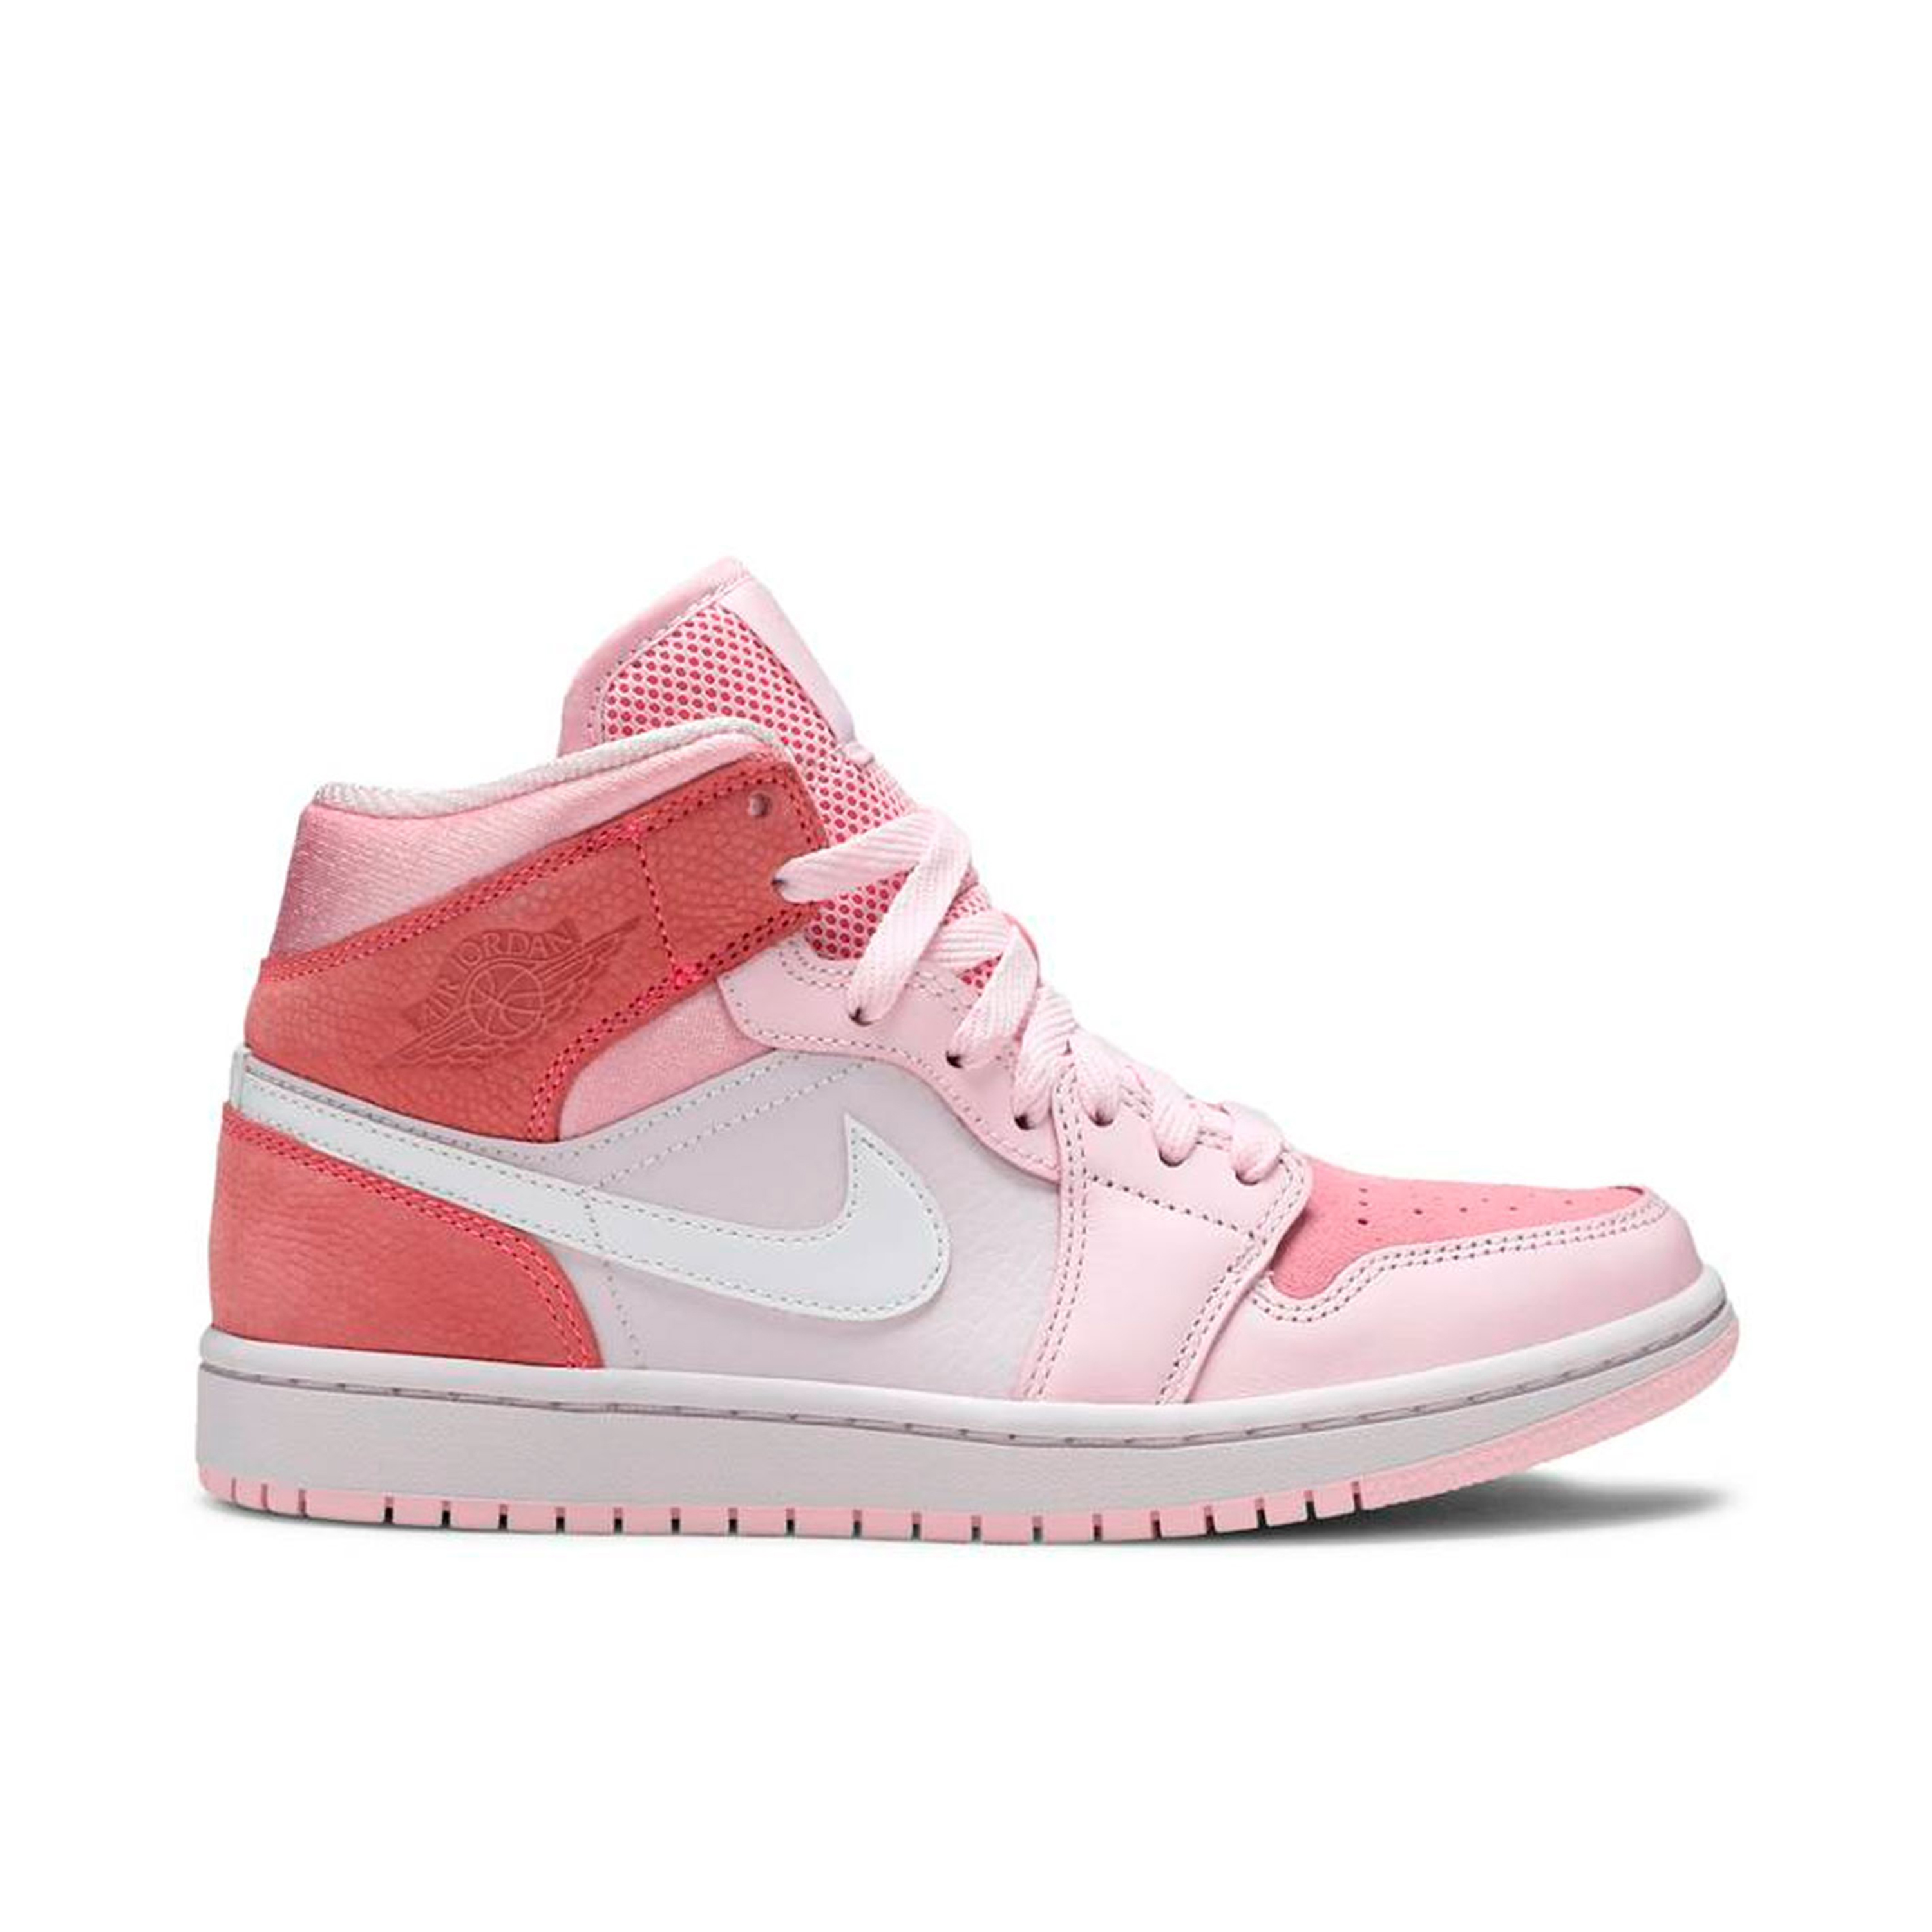 Air Jordan 1 Mid Digital Pink Cw5379 600 Laced